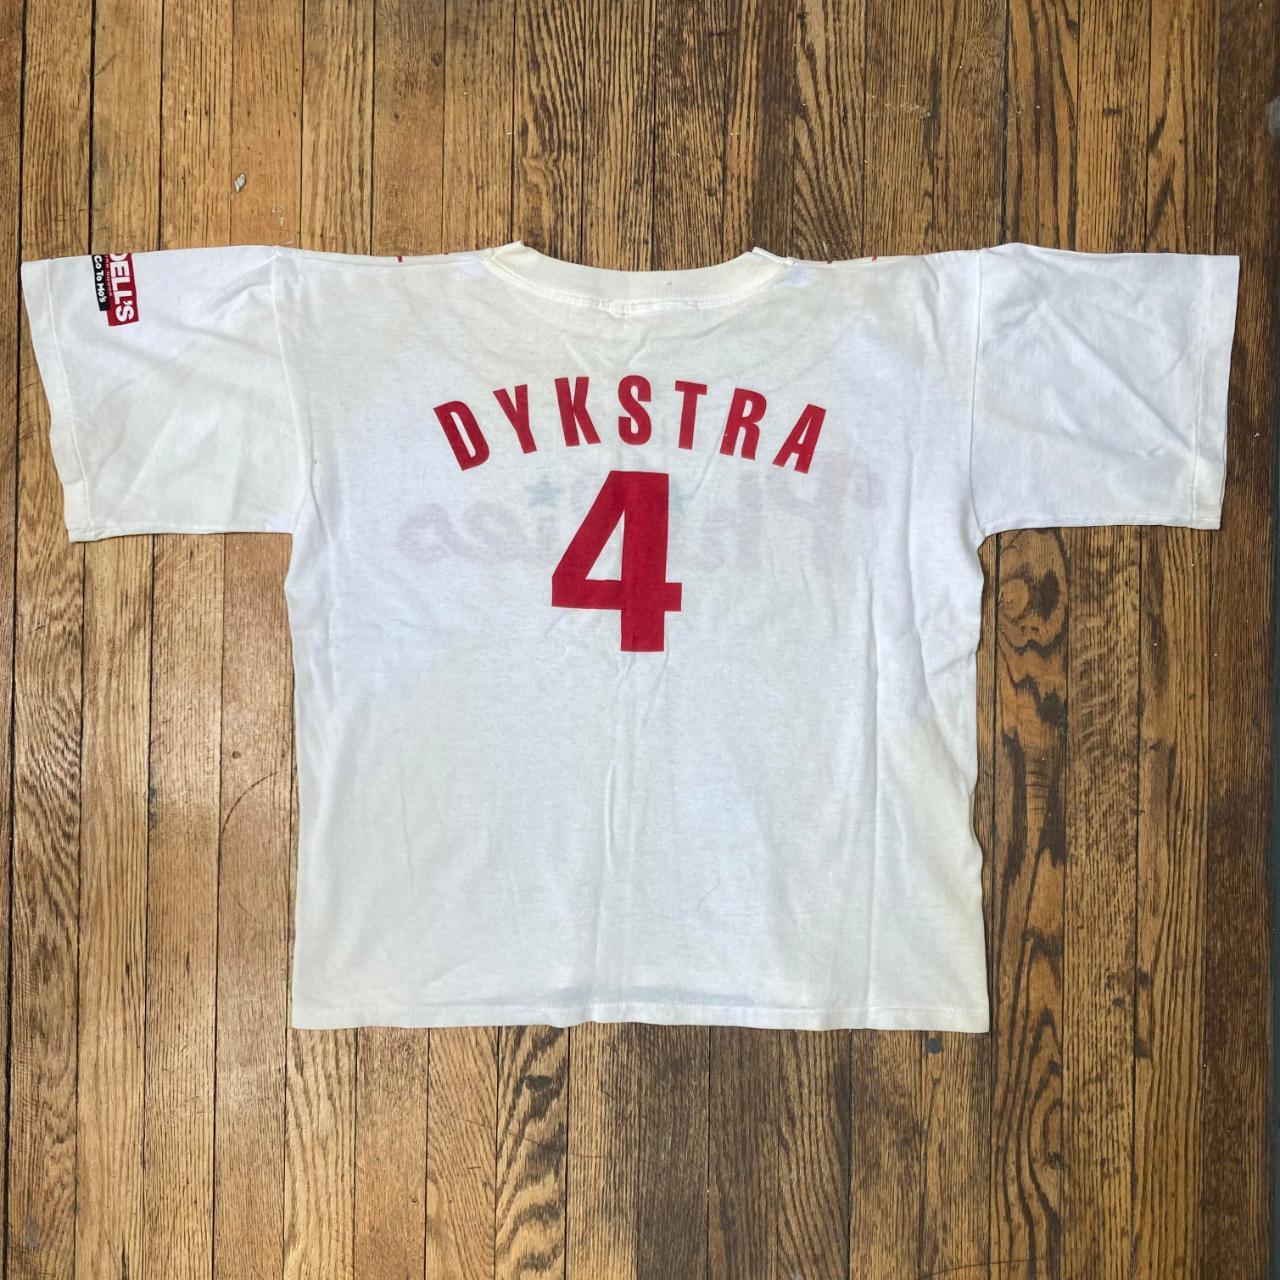 Vintage Philadelphia Phillies Lenny Dykstra t shirt - Depop